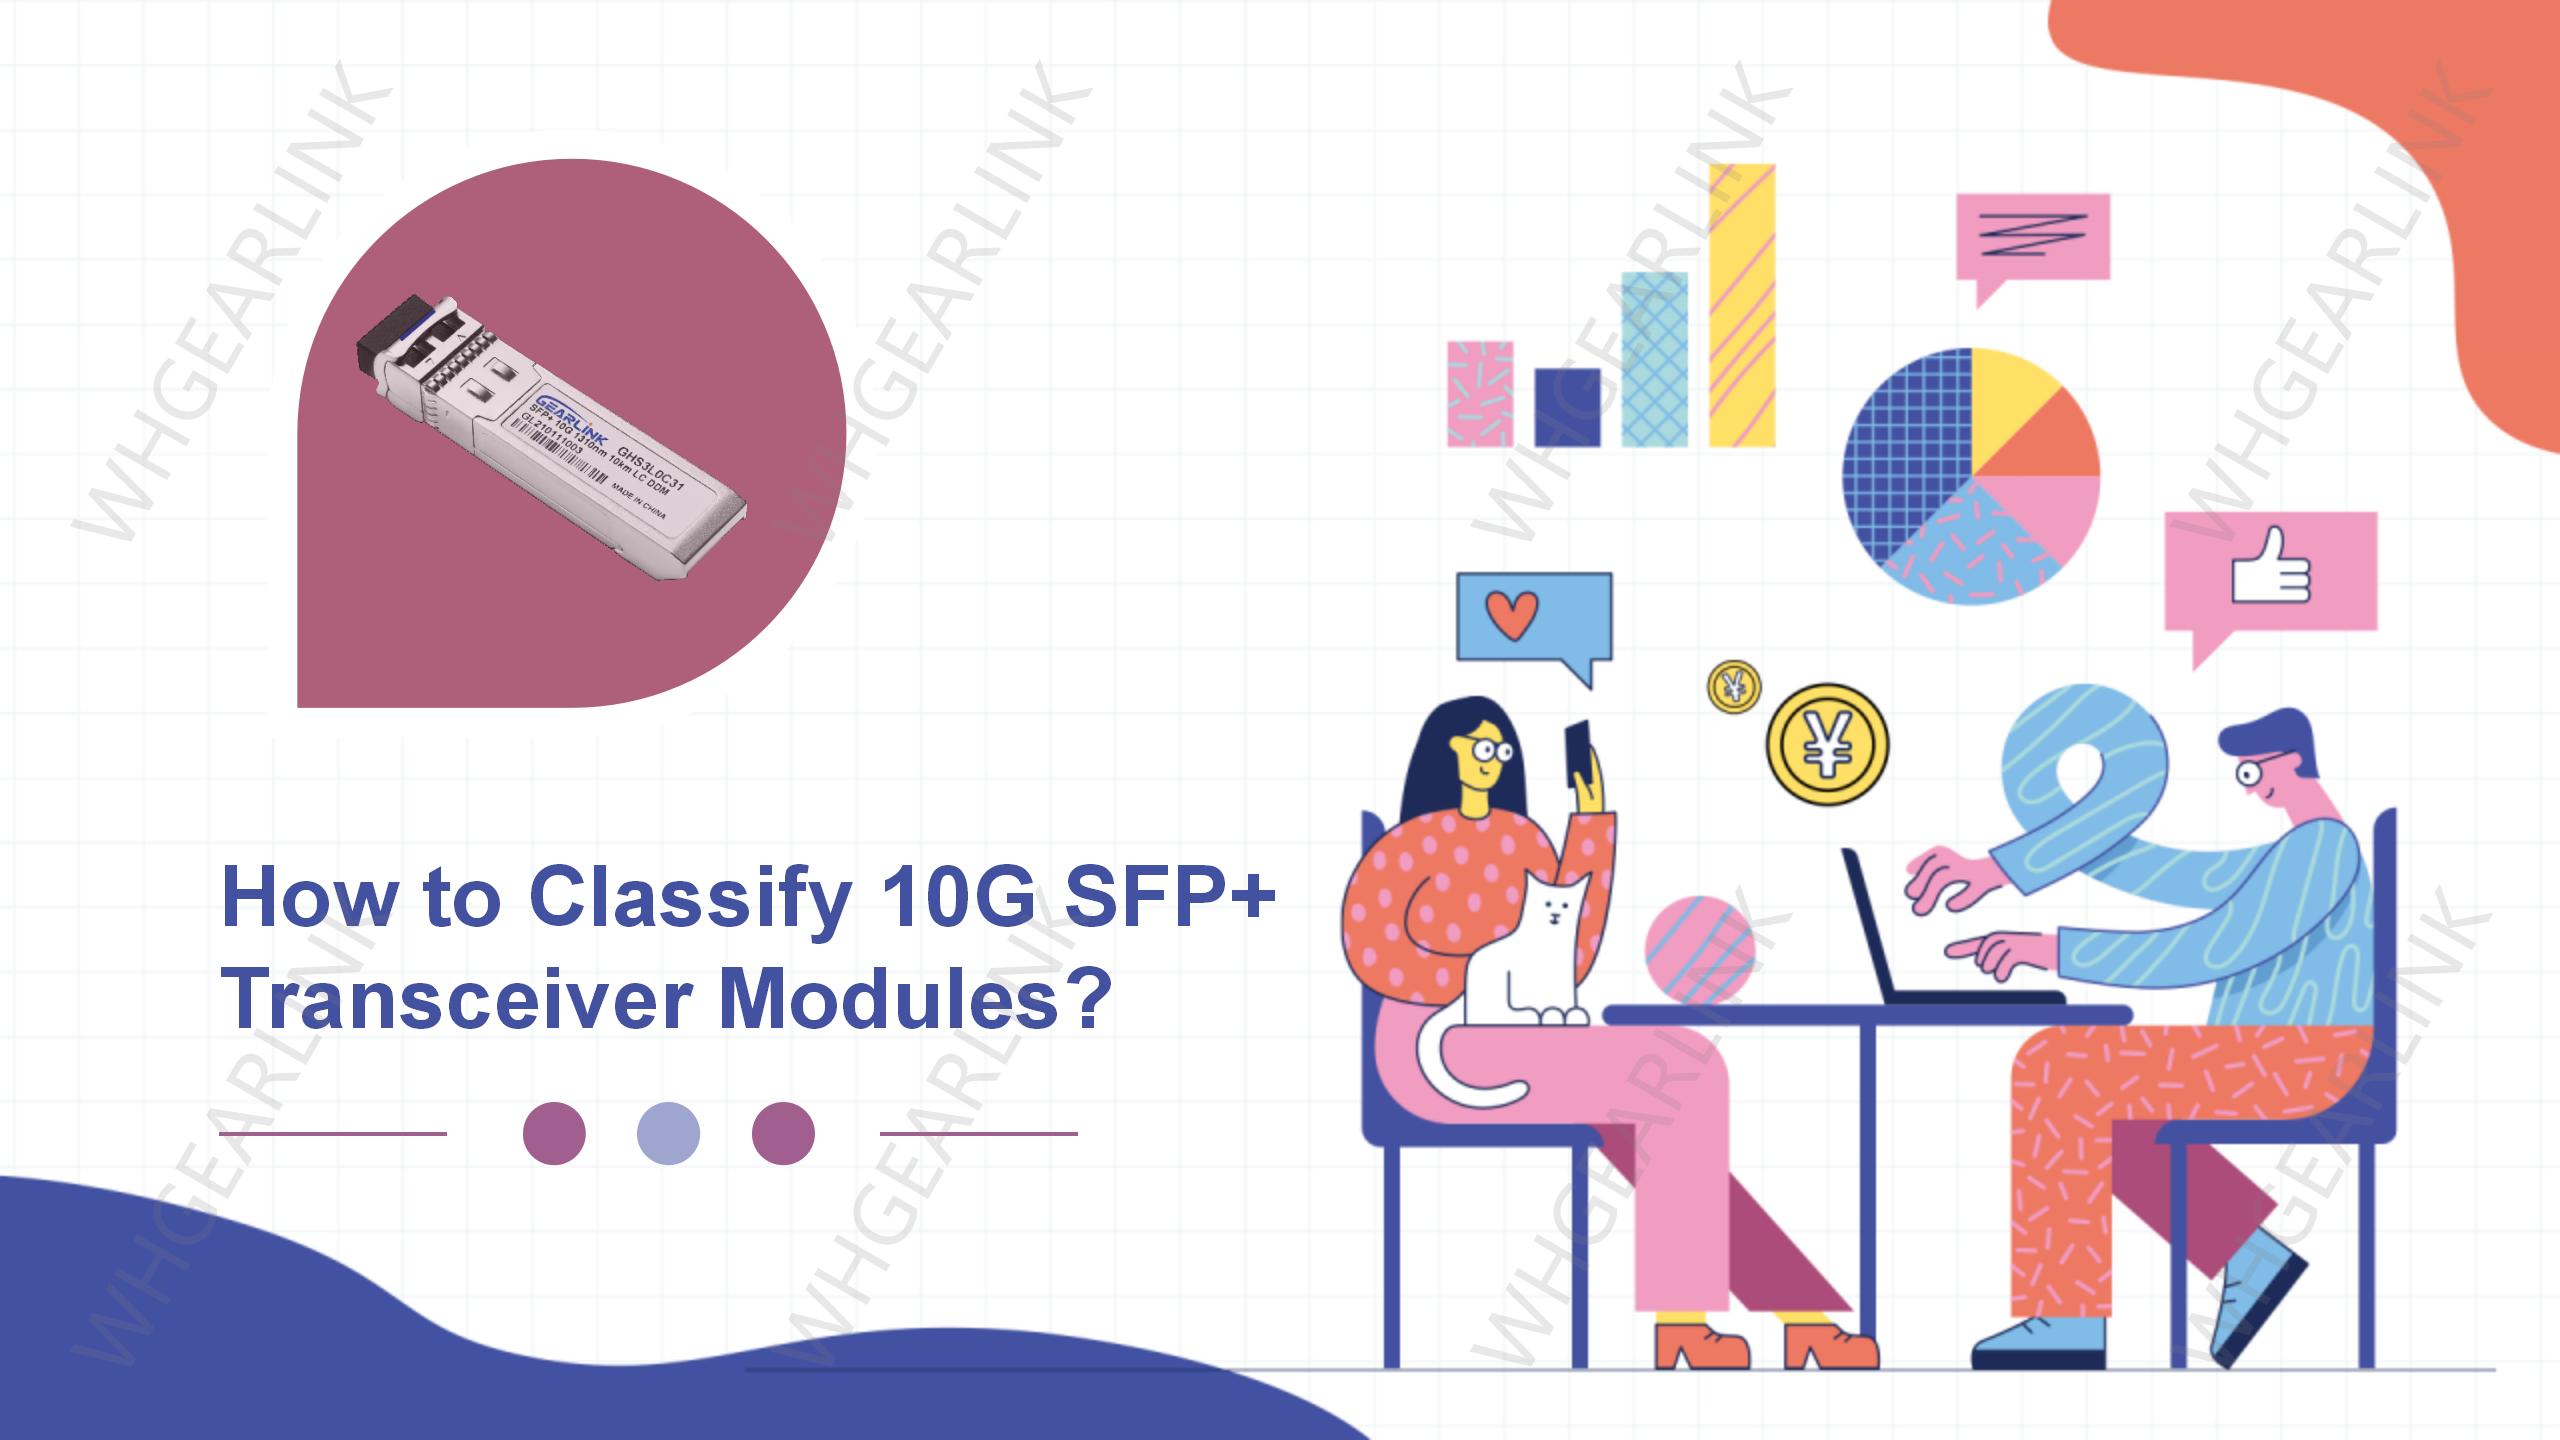 How to Classify 10G SFP+ Transceiver Modules